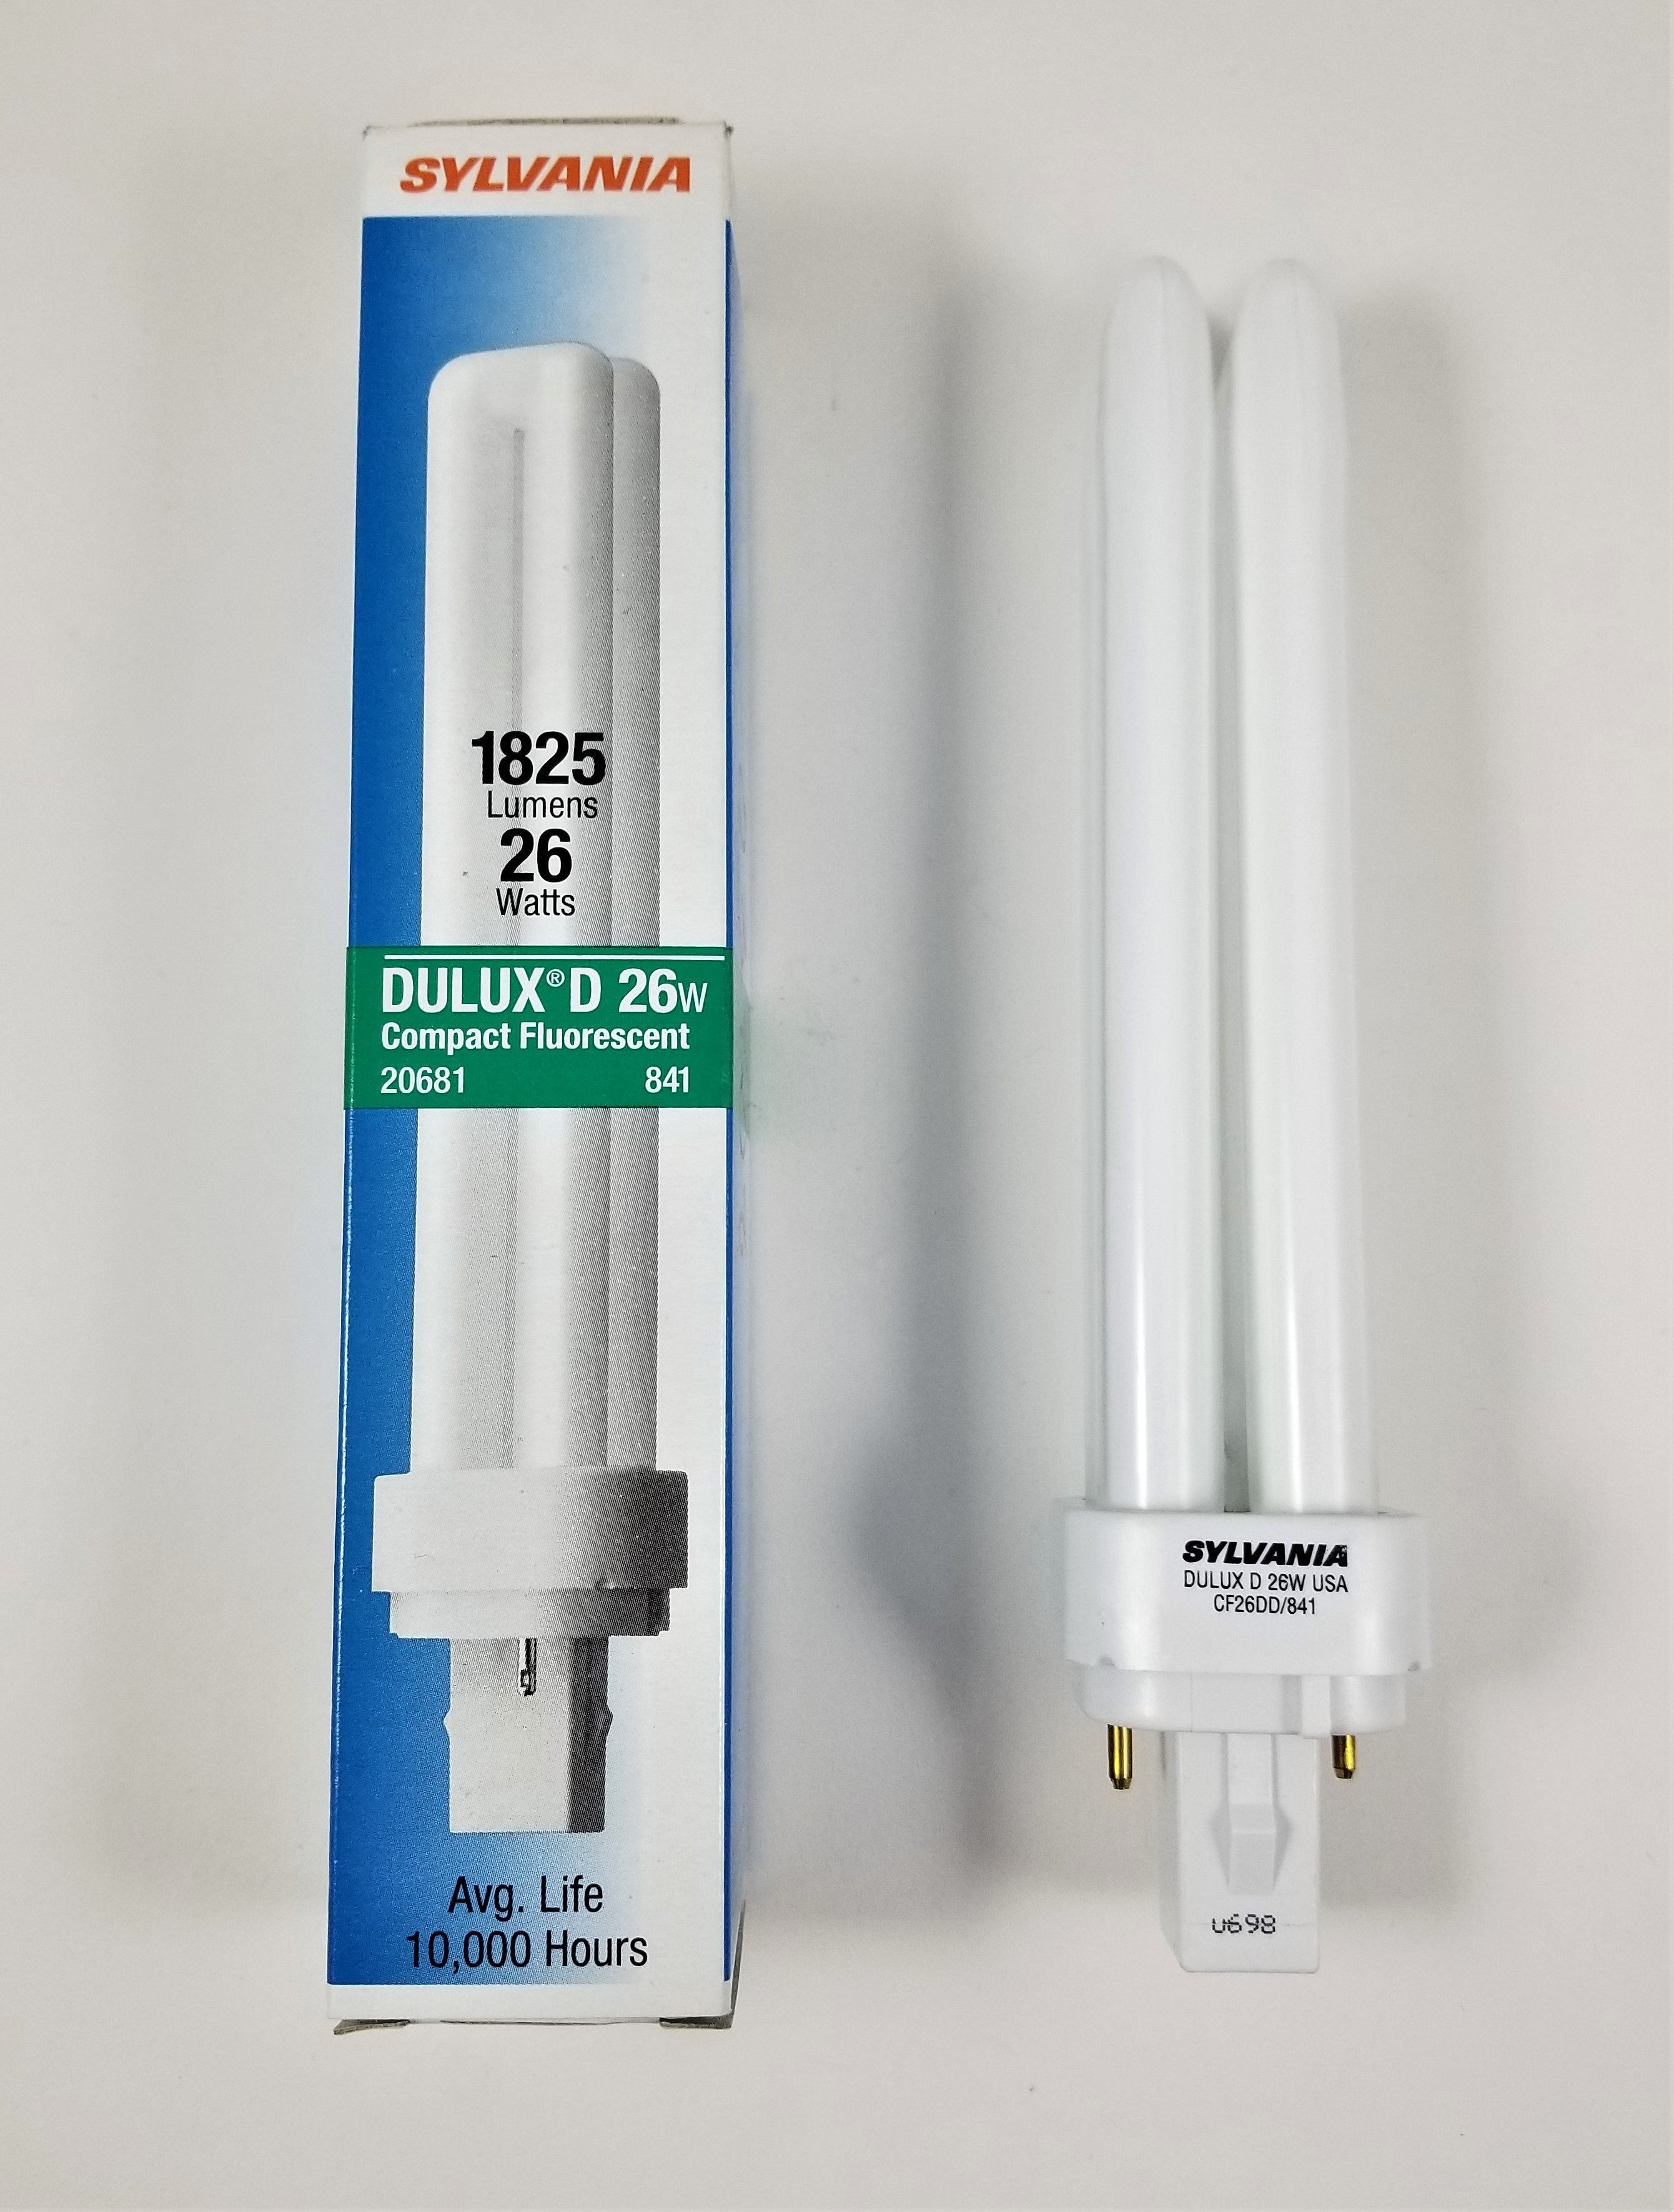 Sylvania Dulux D 26w Quad Tube Fluorescent Bulb